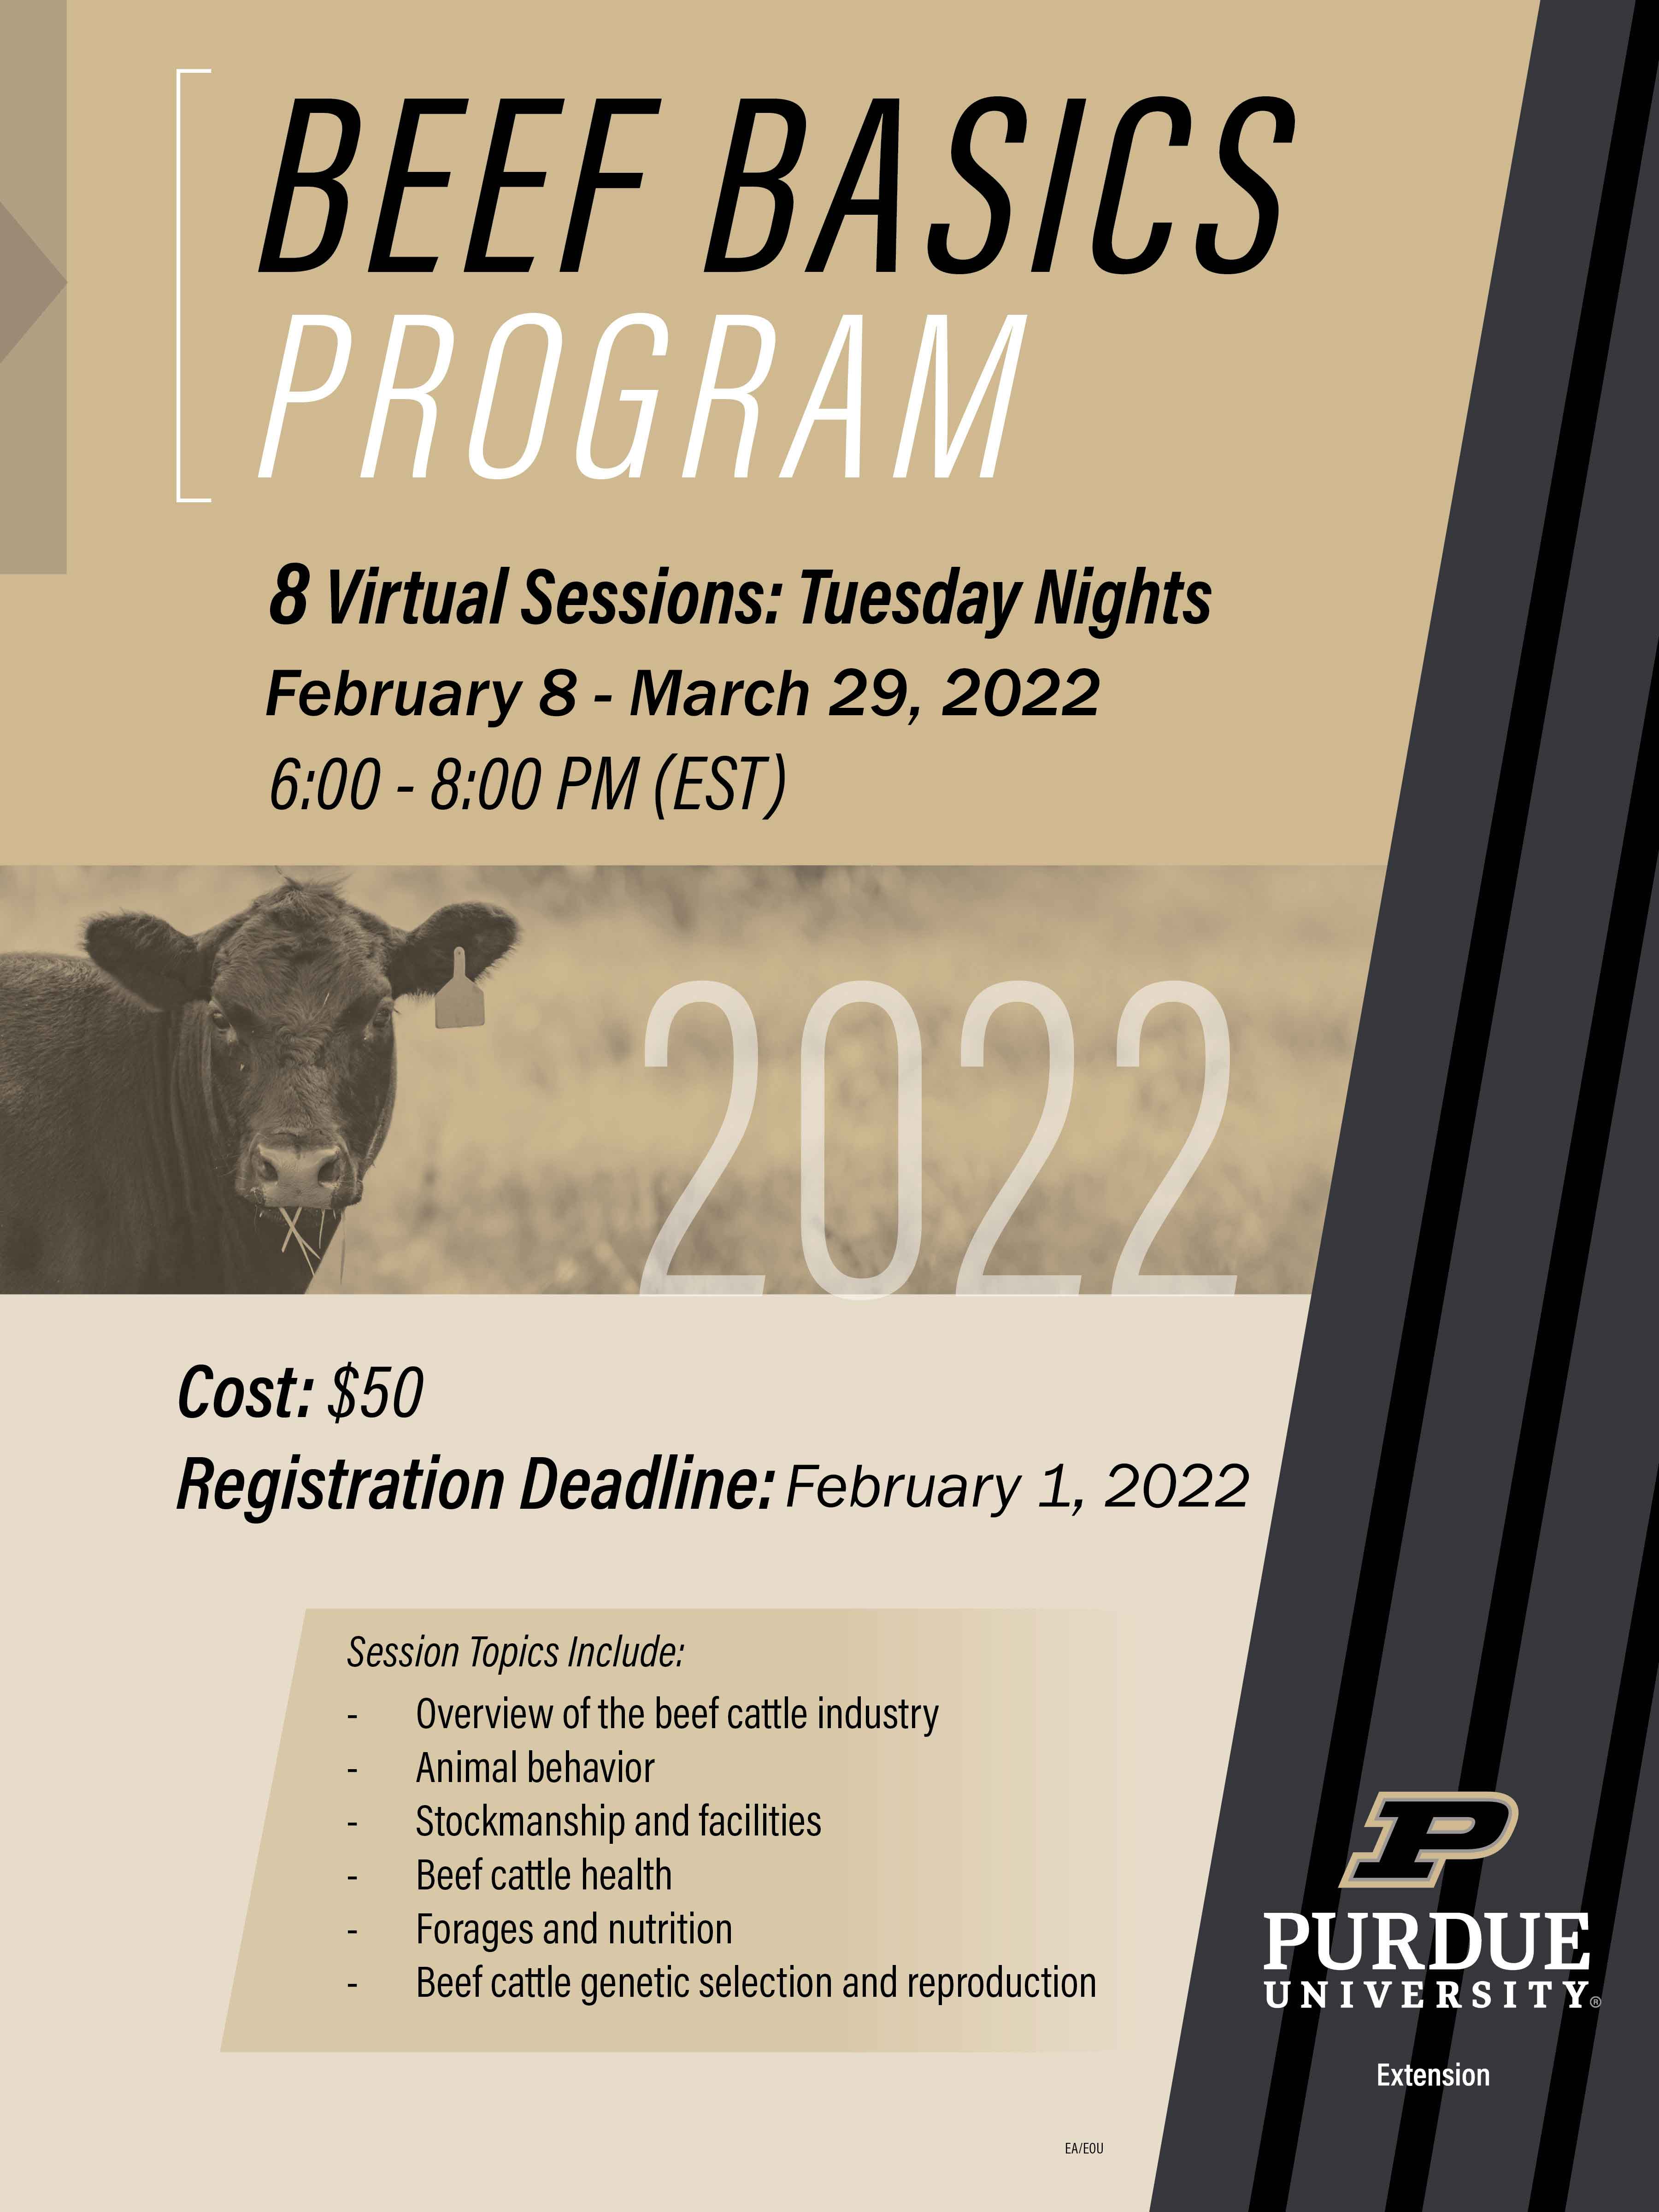 purdue-beef-basics-program-flyer-2022-update.jpg